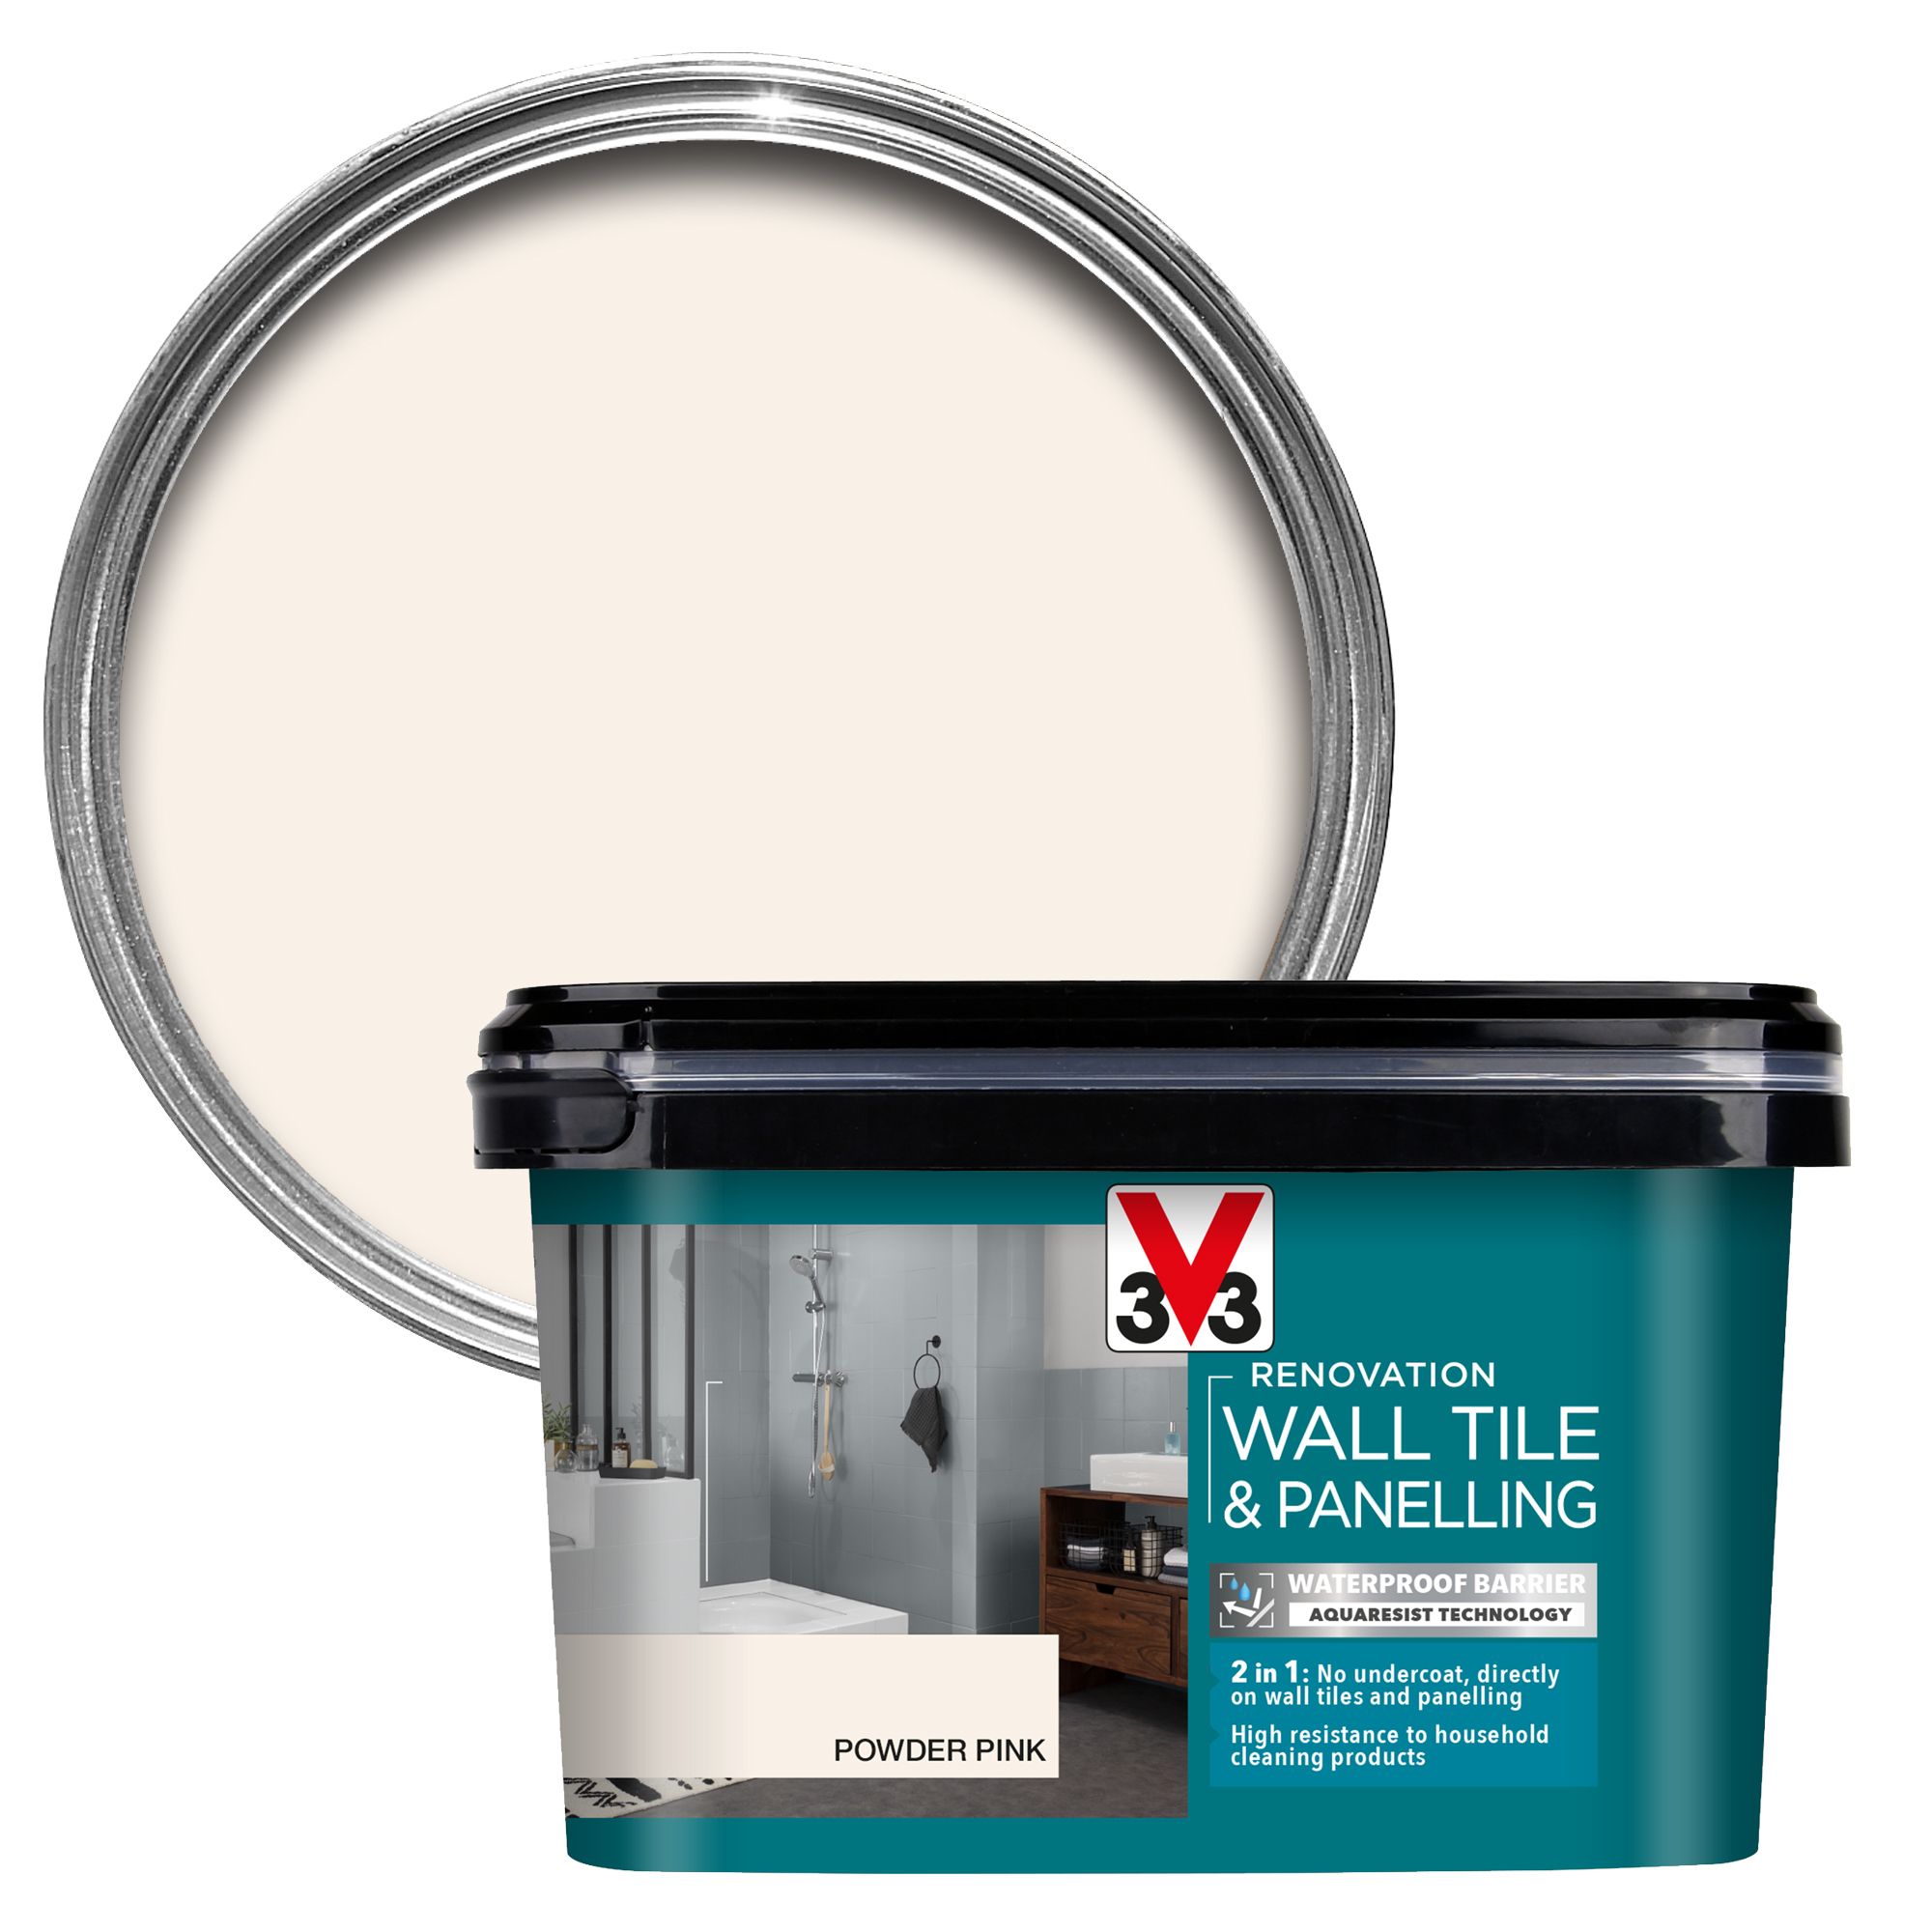 V33 Renovation Powder Pink Satinwood Wall Tile & Panelling Paint, 2L